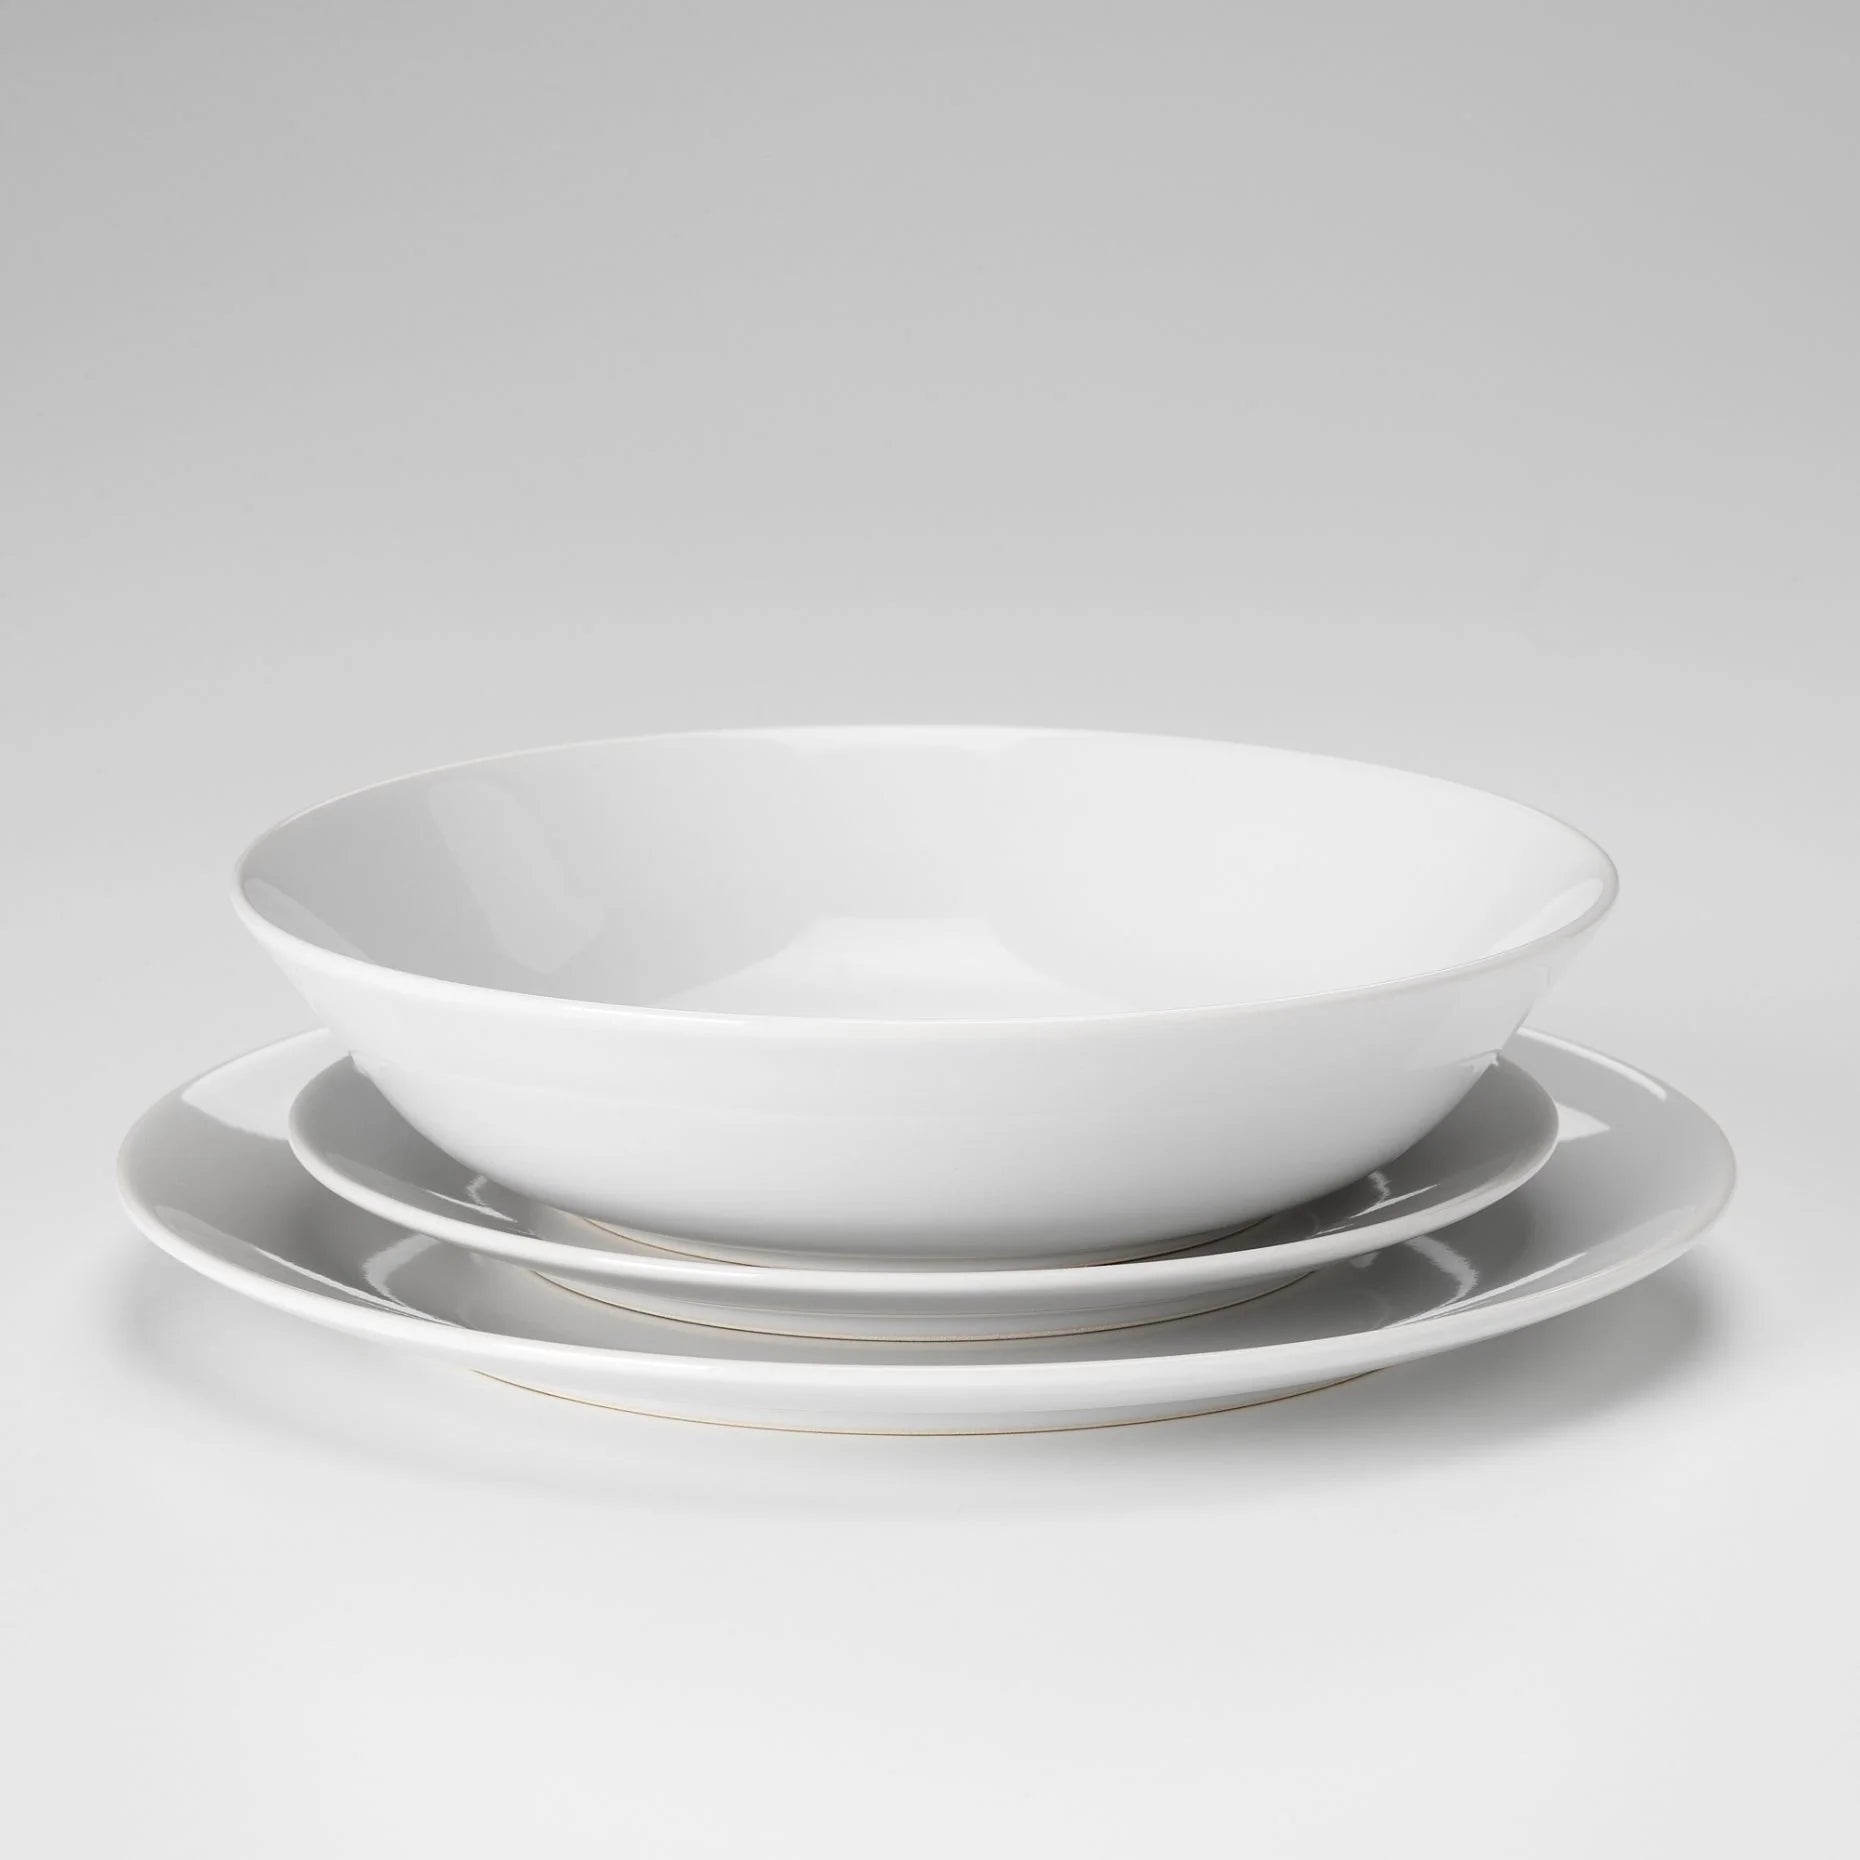 IKEA FLITIGHET Dinnerware Set 18-Piece - White